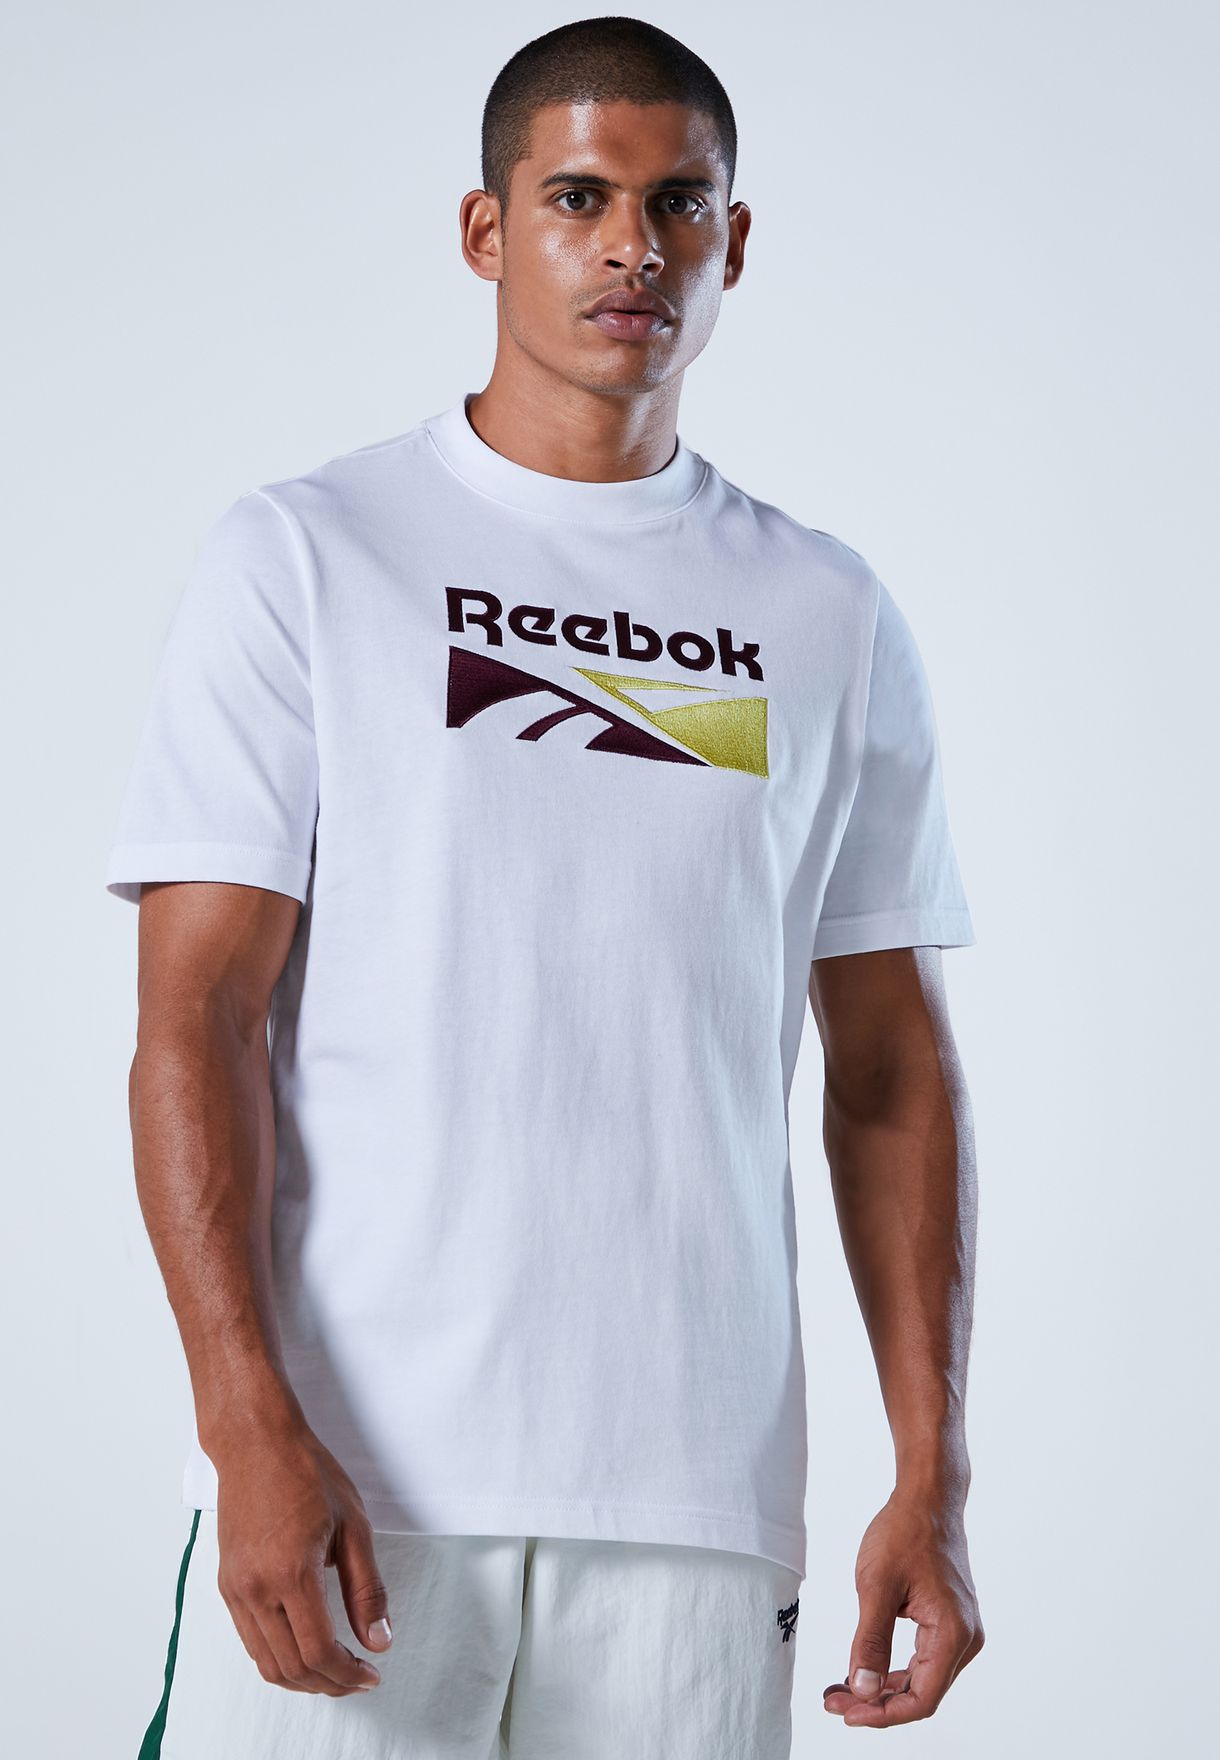 Reebok Uomo Vector Logo T-Shirt Girocollo Maglietta